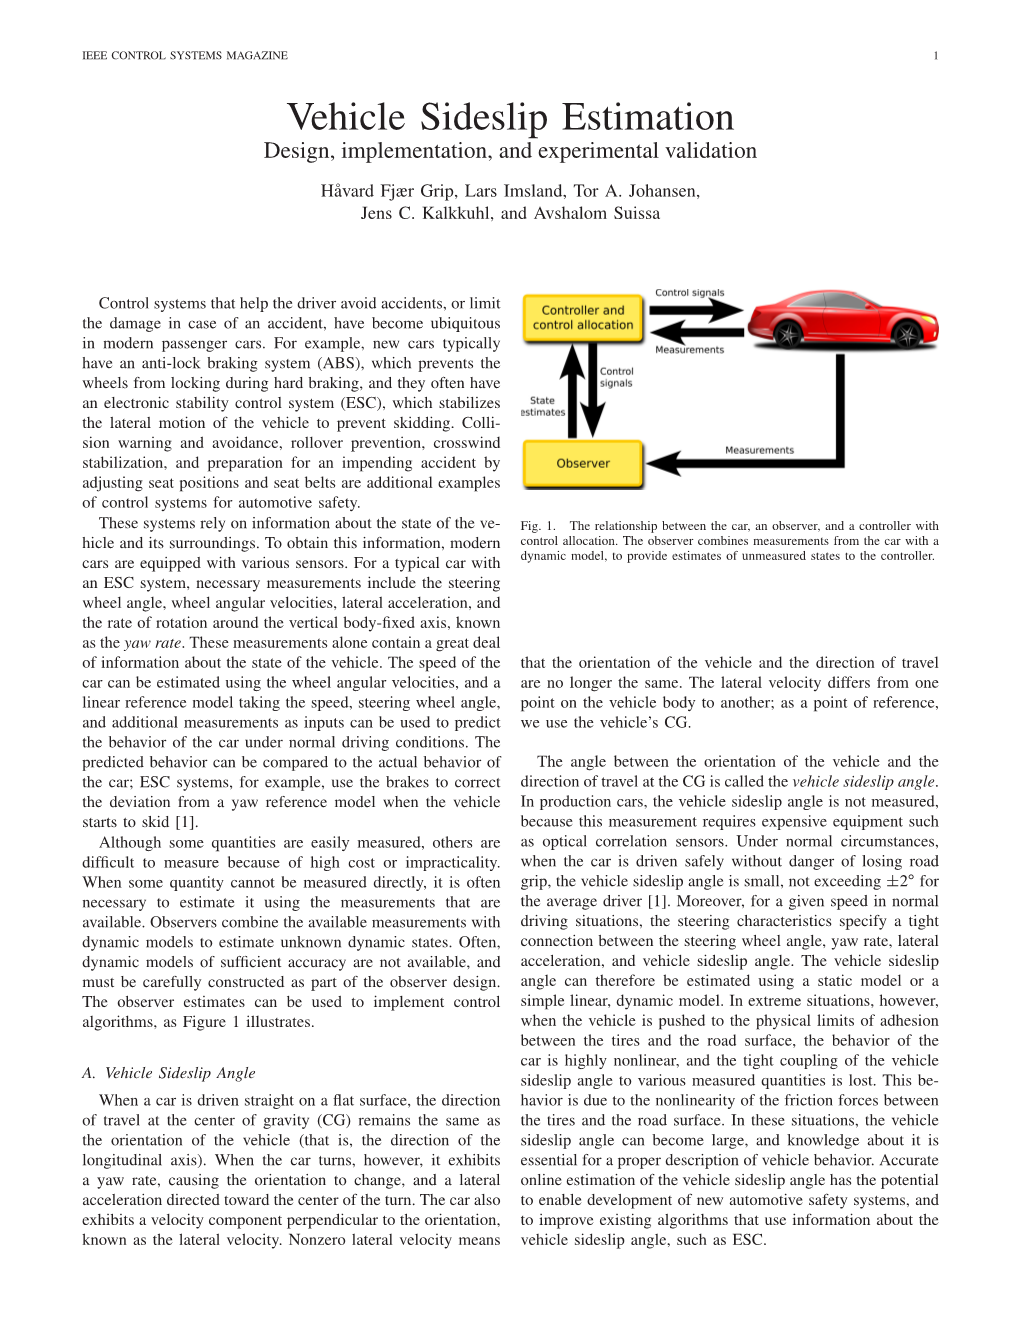 Vehicle Sideslip Estimation Design, Implementation, and Experimental Validation